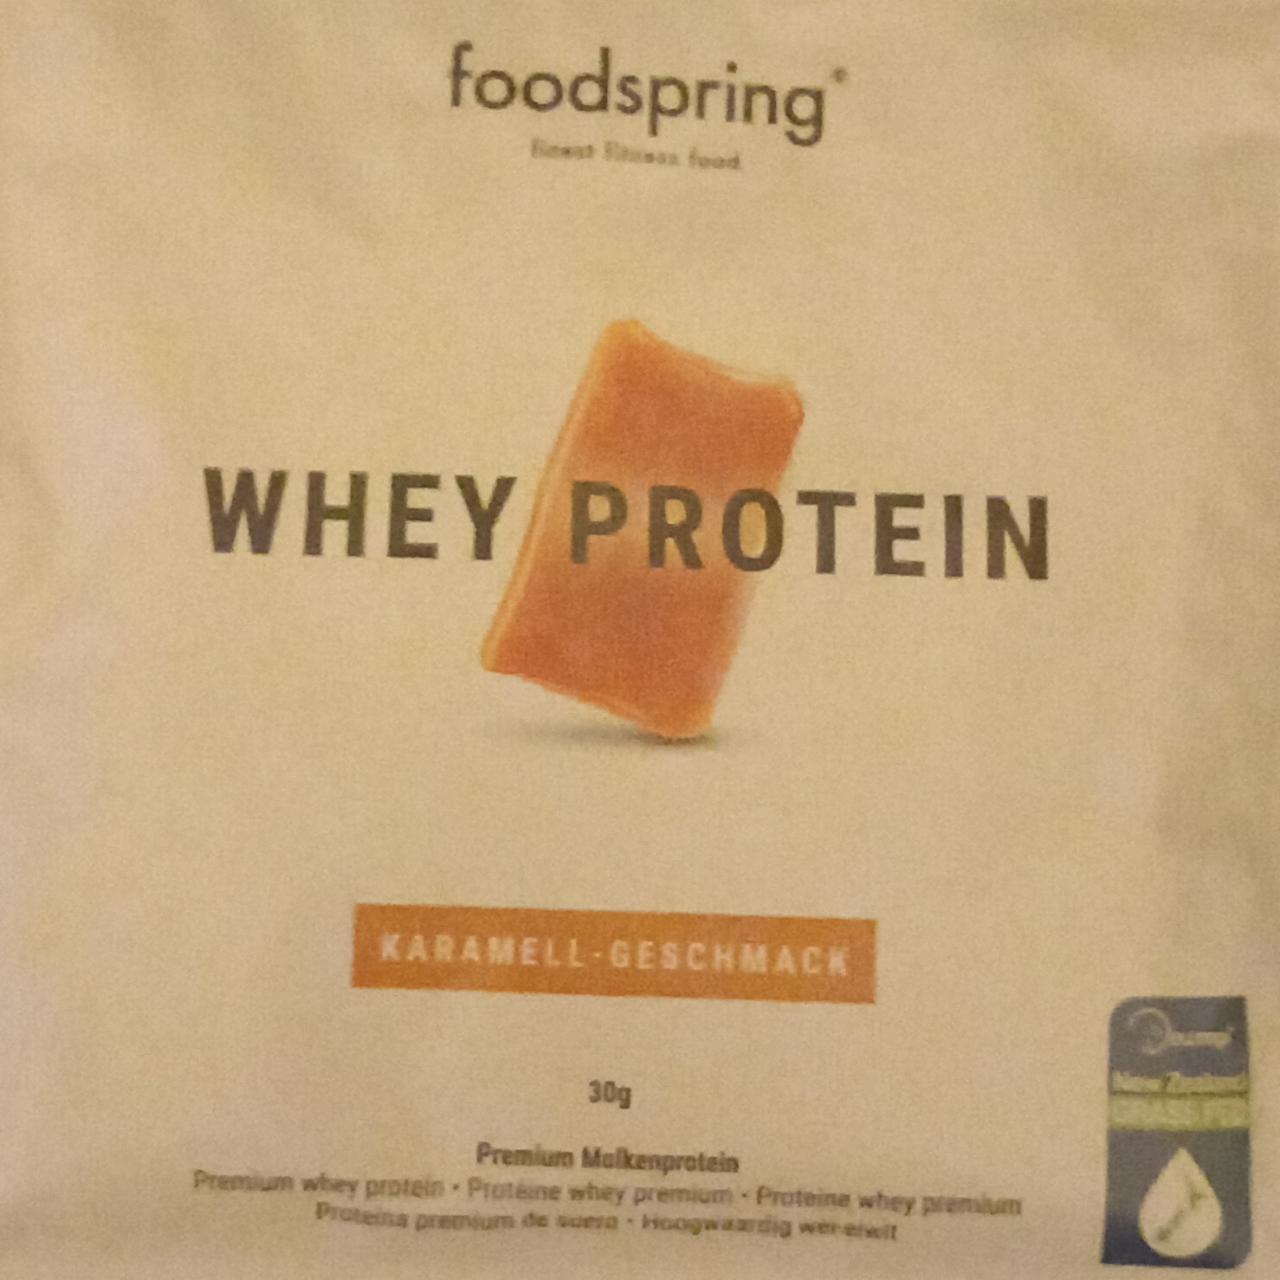 Fotografie - Whey protein Karamell-Geschmack Foodspring